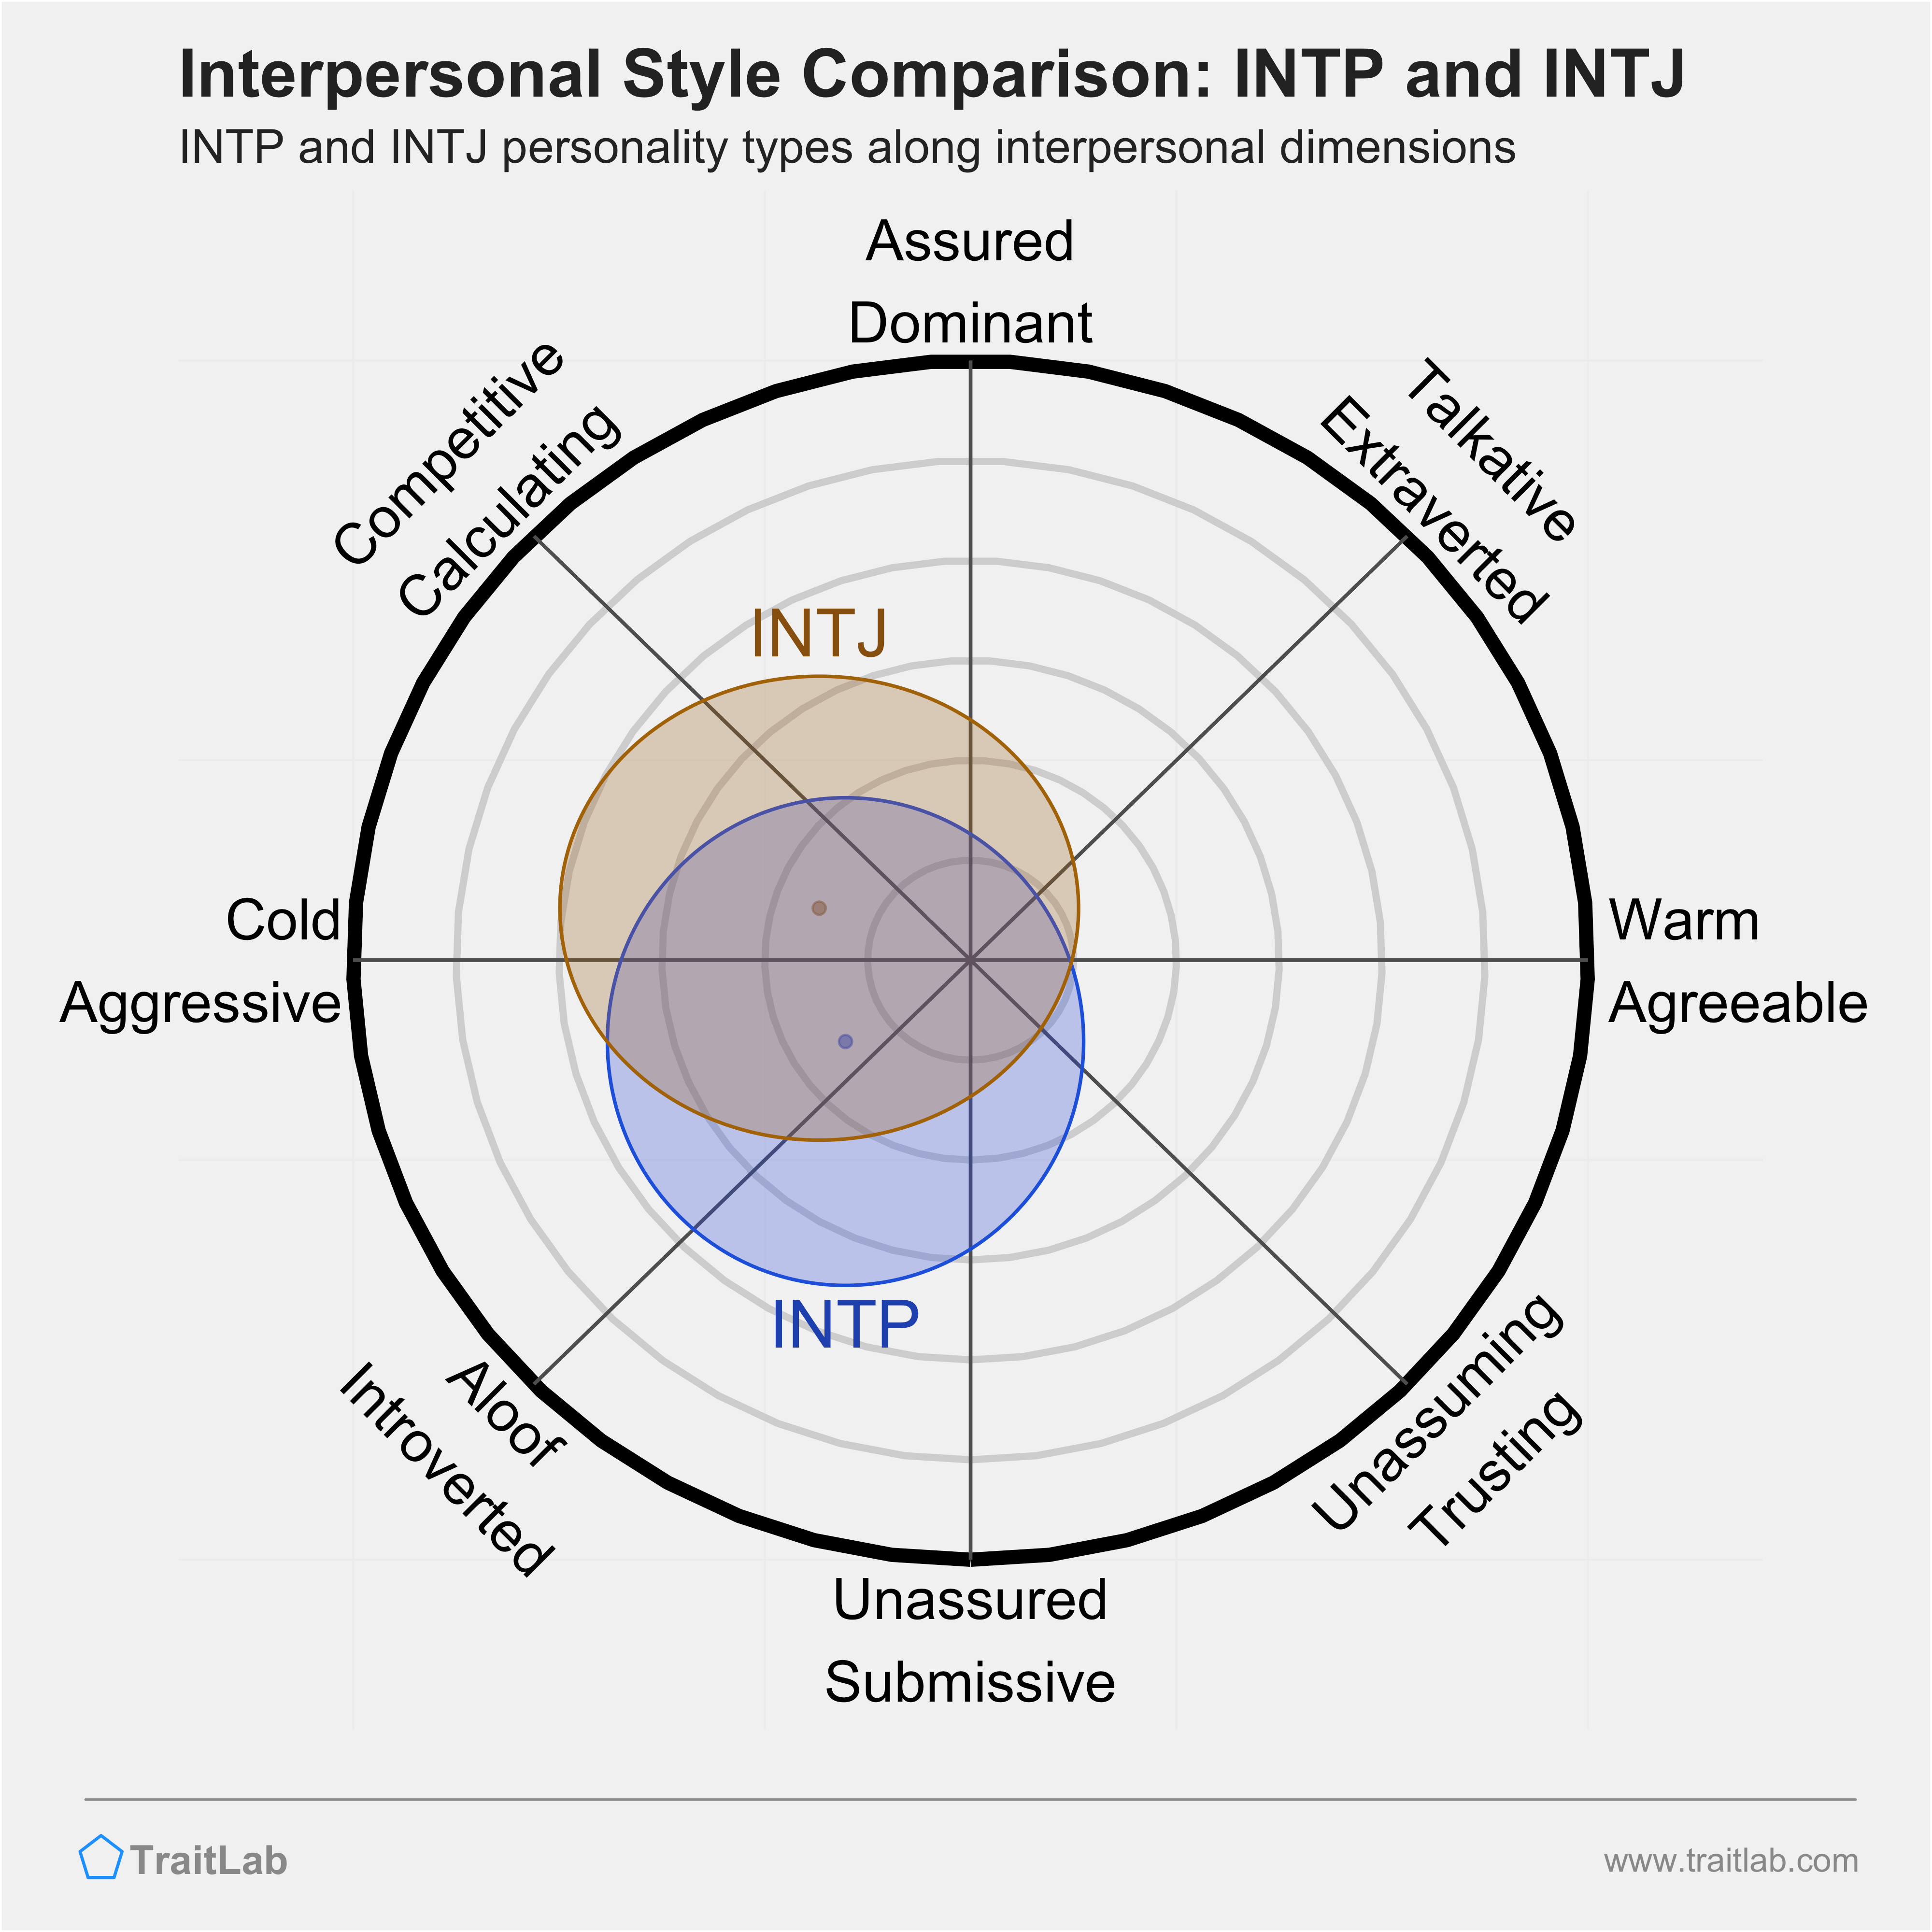 Erna MBTI Personality Type: INTP or INTJ?